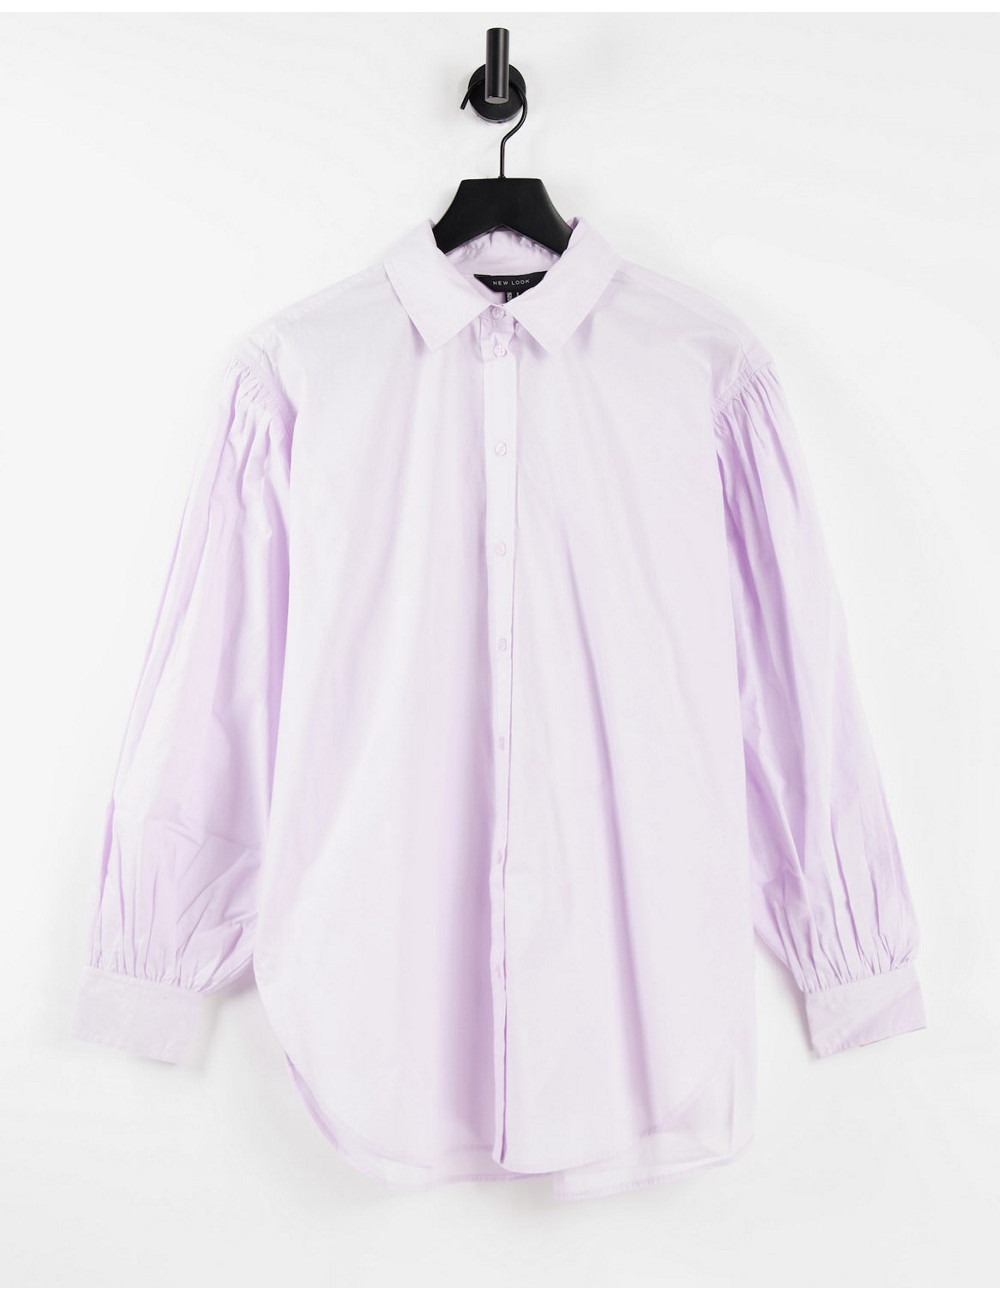 New Look poplin shirt in lilac